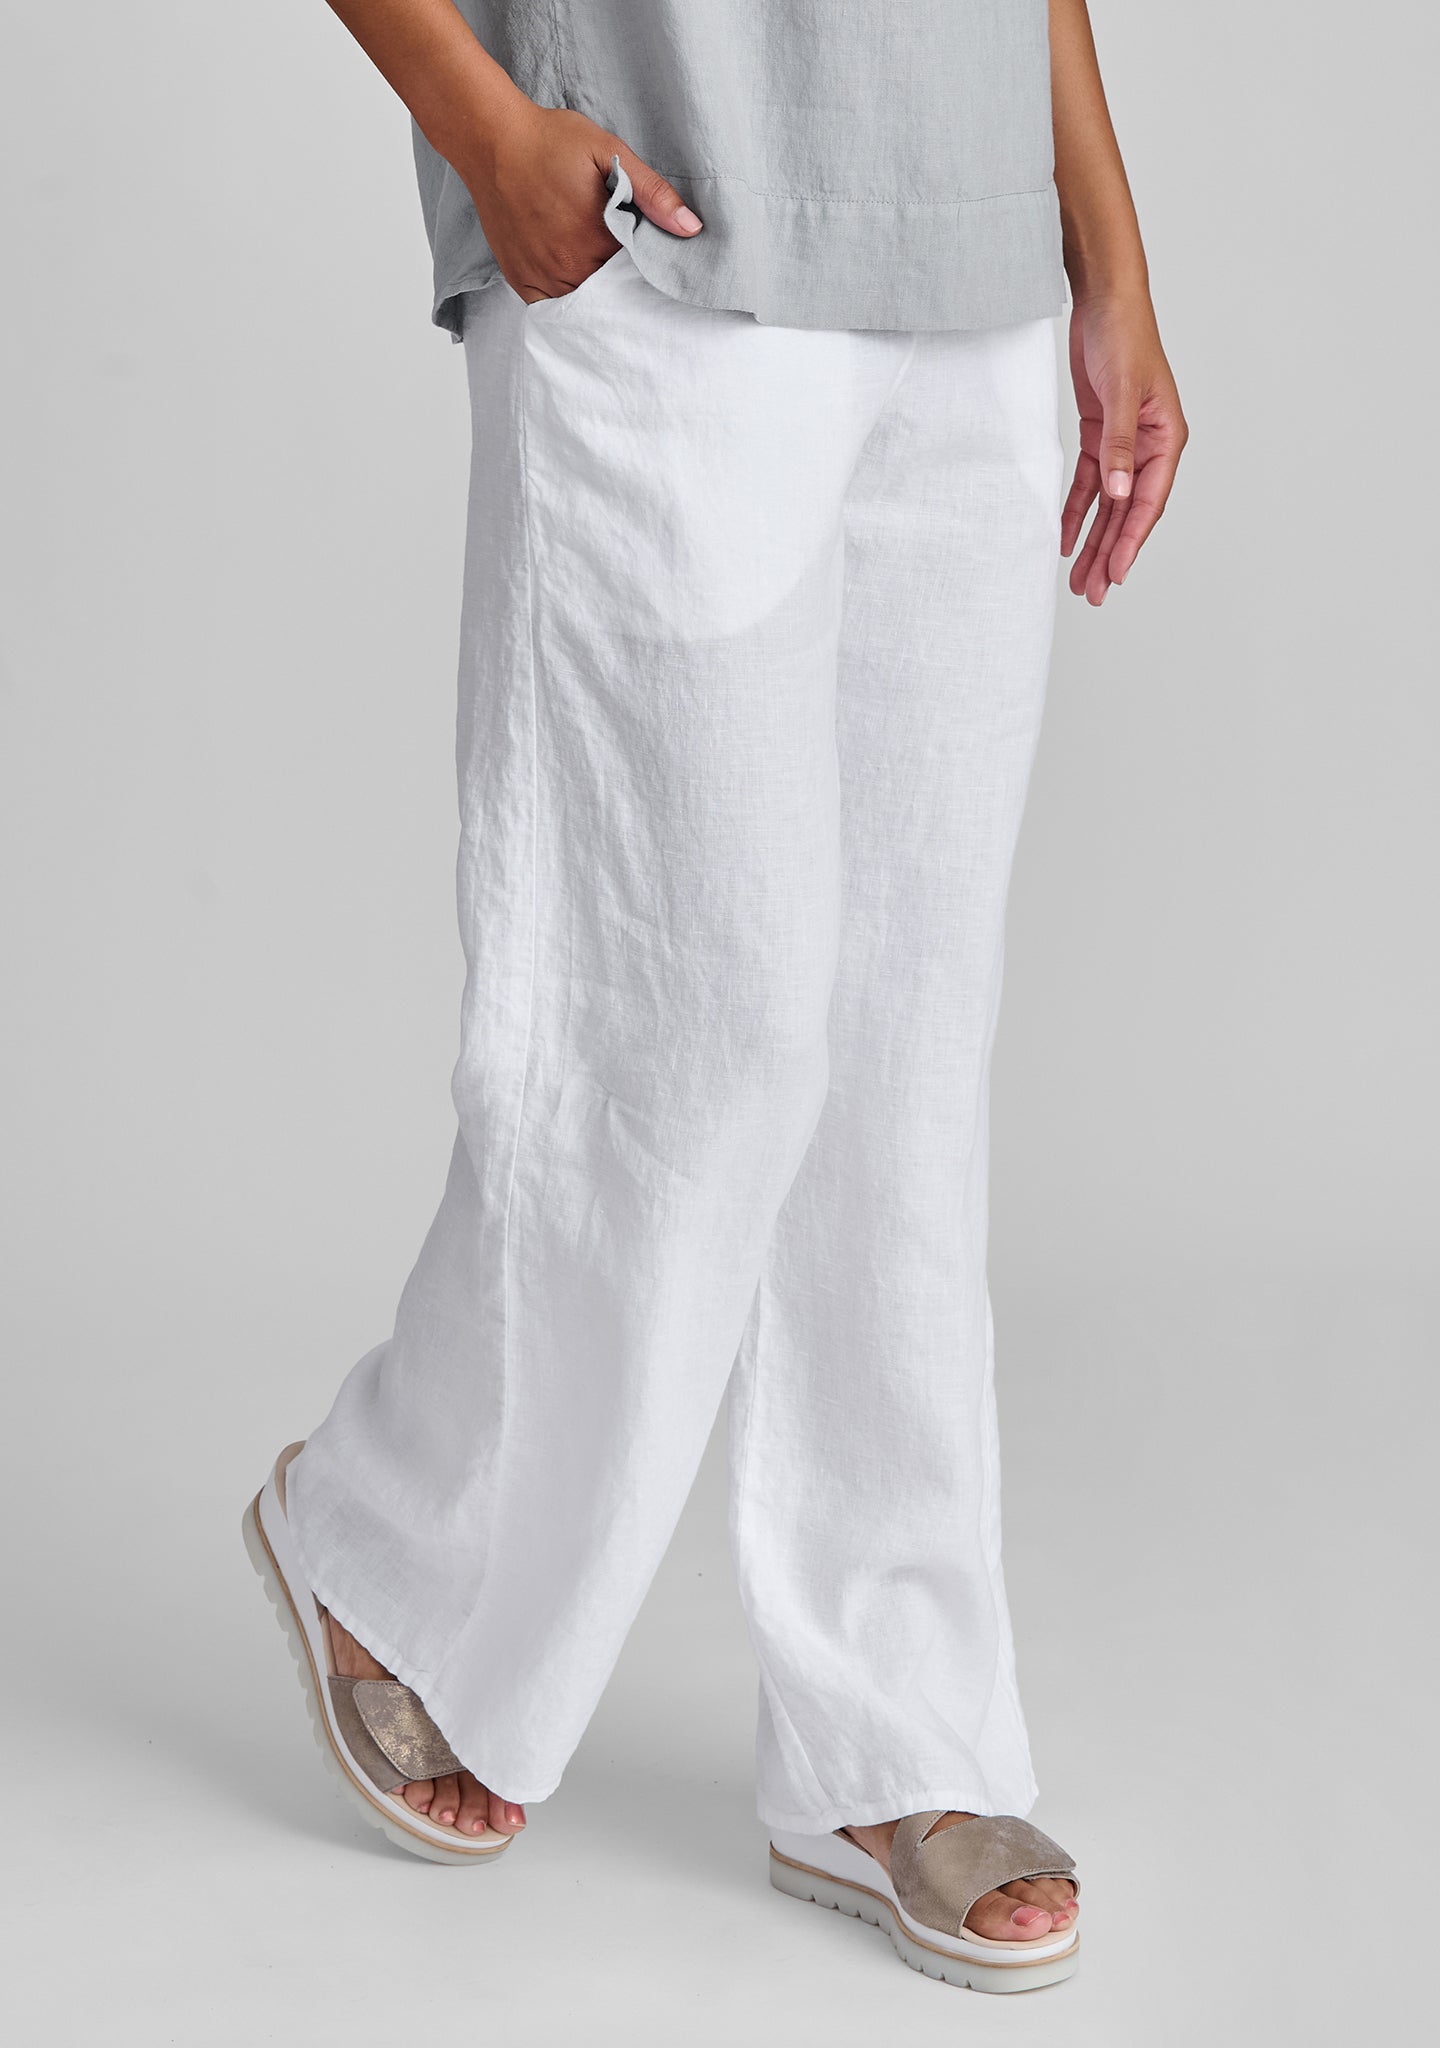 flat iron pant linen drawstring pants white